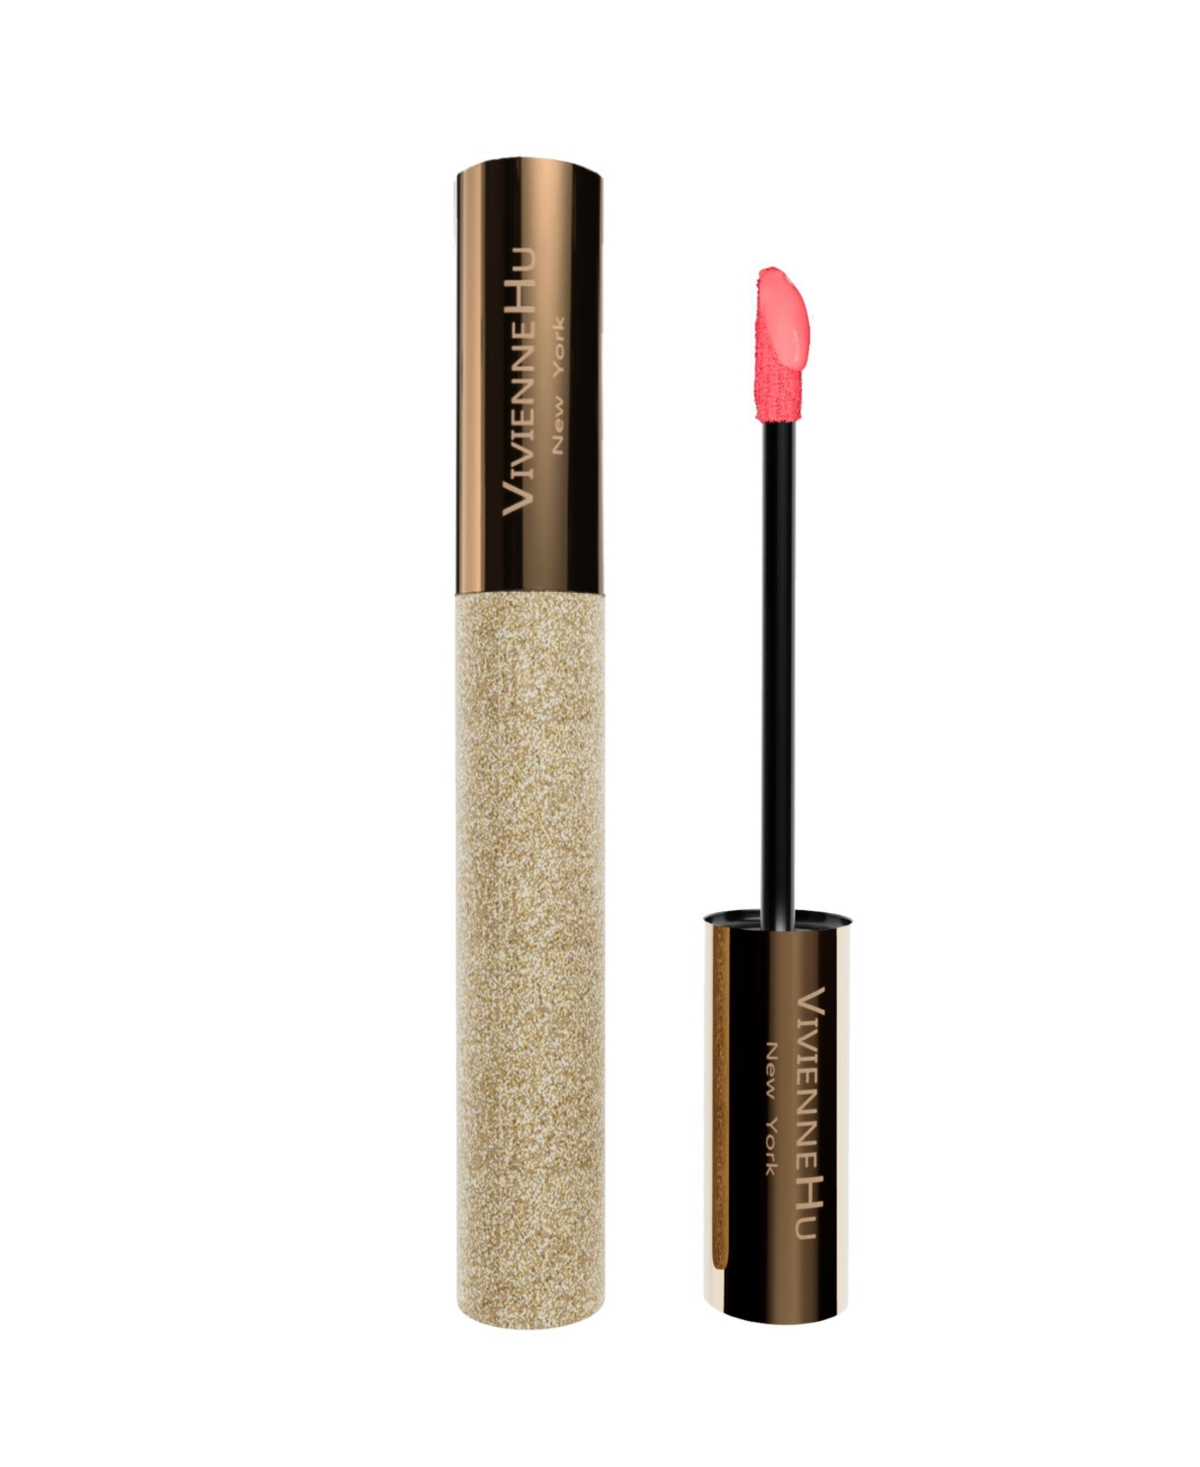 Goldsand Long-Term Hydration Effect Lip Plumping Gloss â With Hyaluronic Acid, 0.27 oz. - Pop Pink